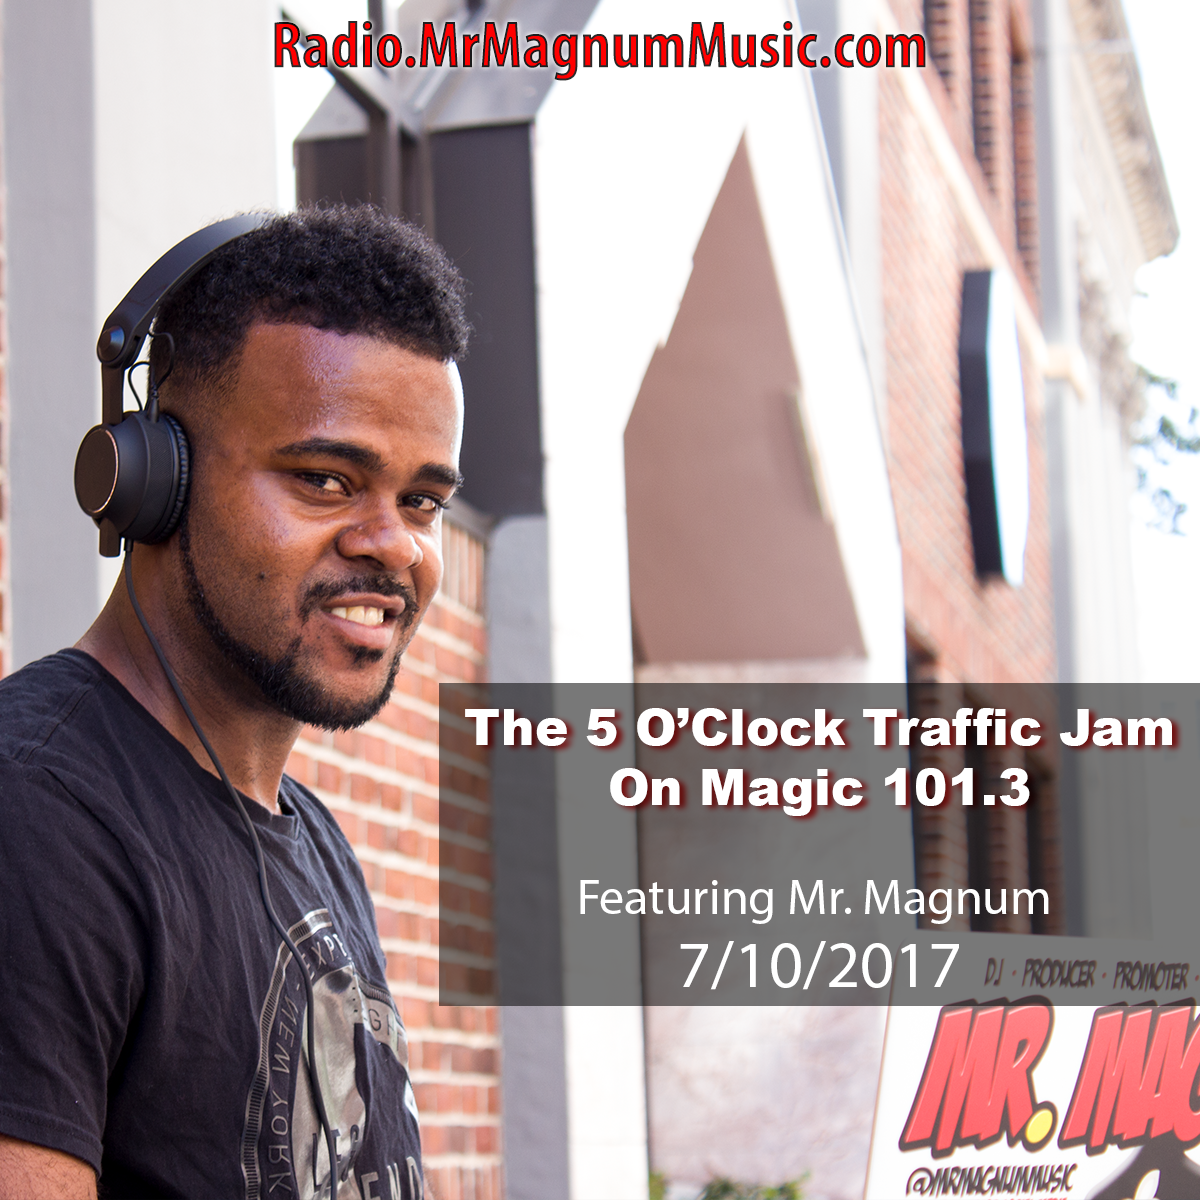 The 5 O'Clock Traffic Jam 20170710 featuring Gainesville's #1 DJ, Mr. Magnum on Magic 101.3